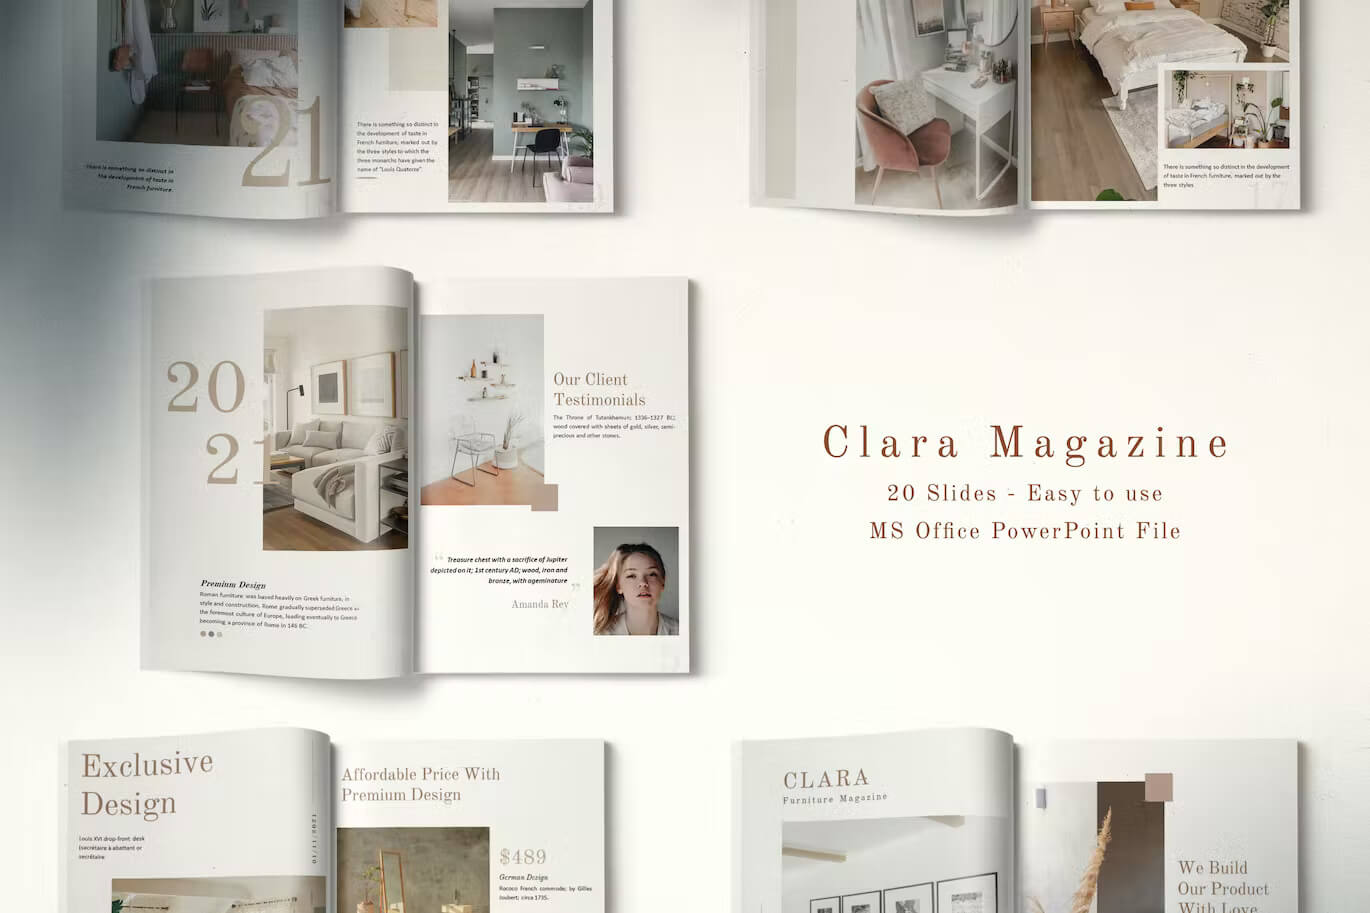 Clara Magazine's client testimonials.